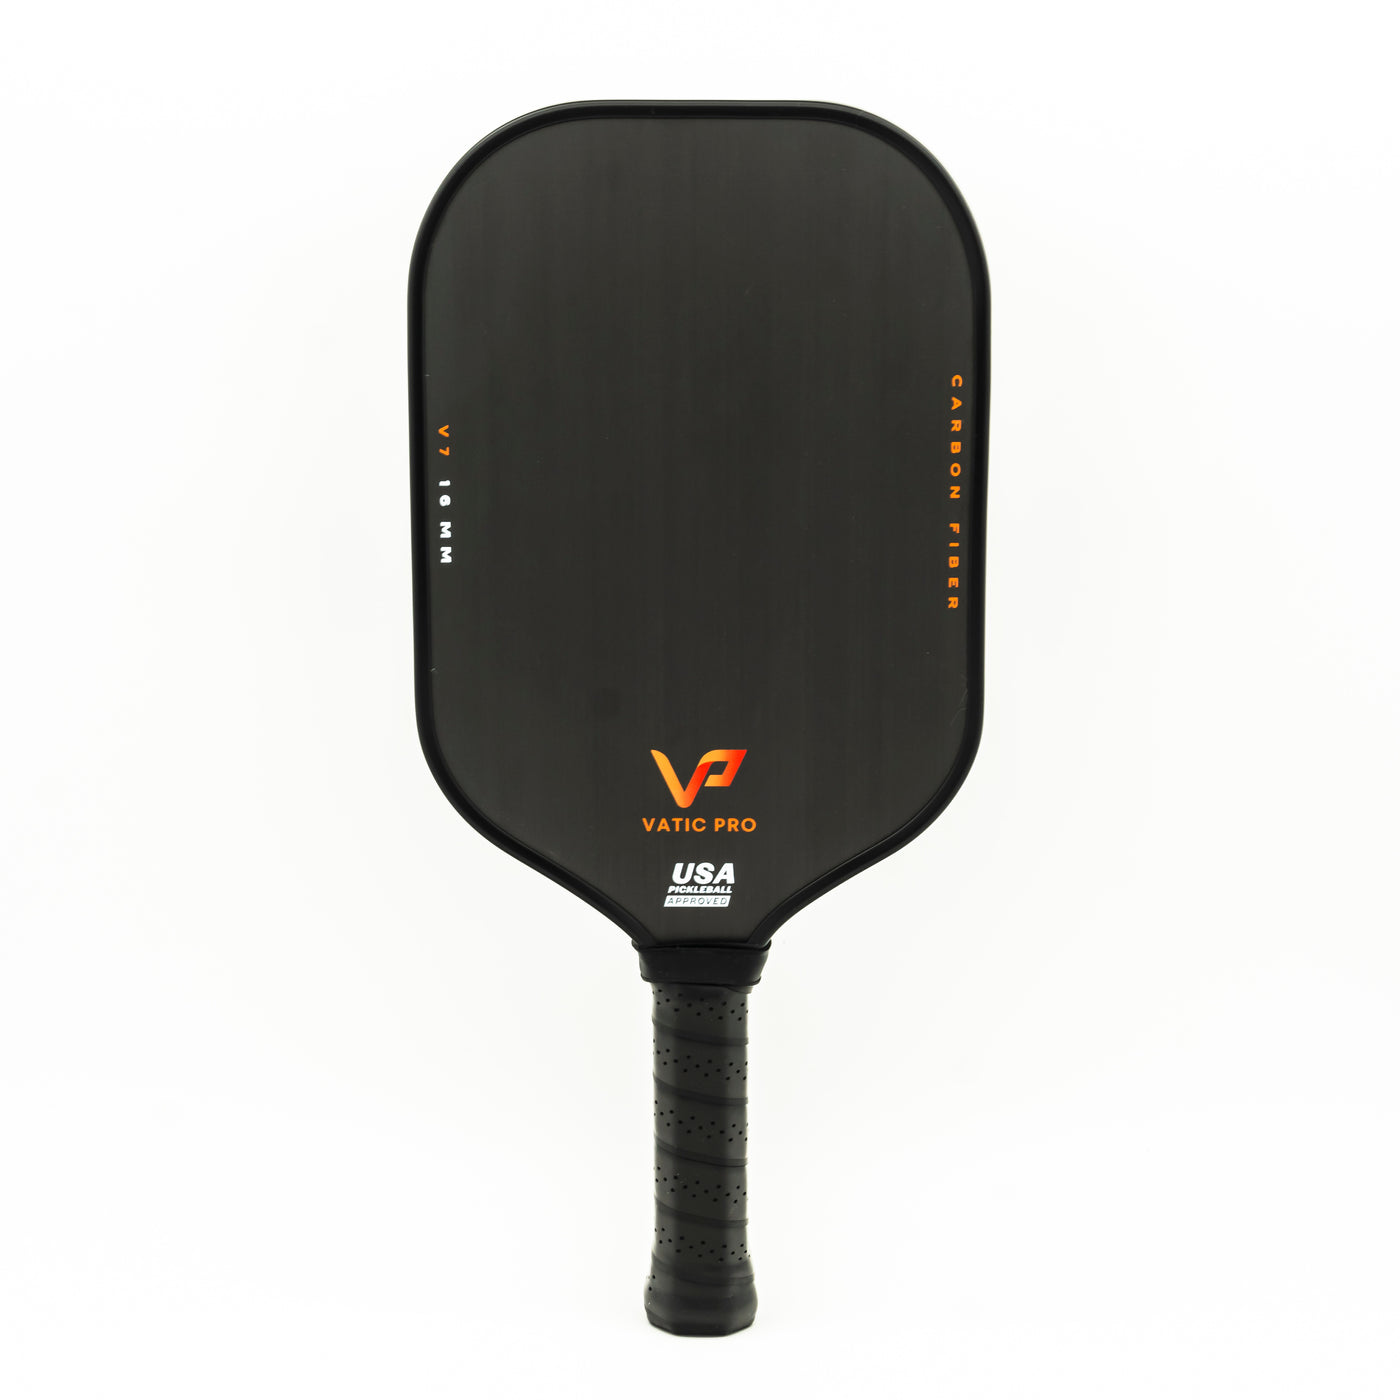 A black and orange Vatic V7 16mm paddle on a white background.